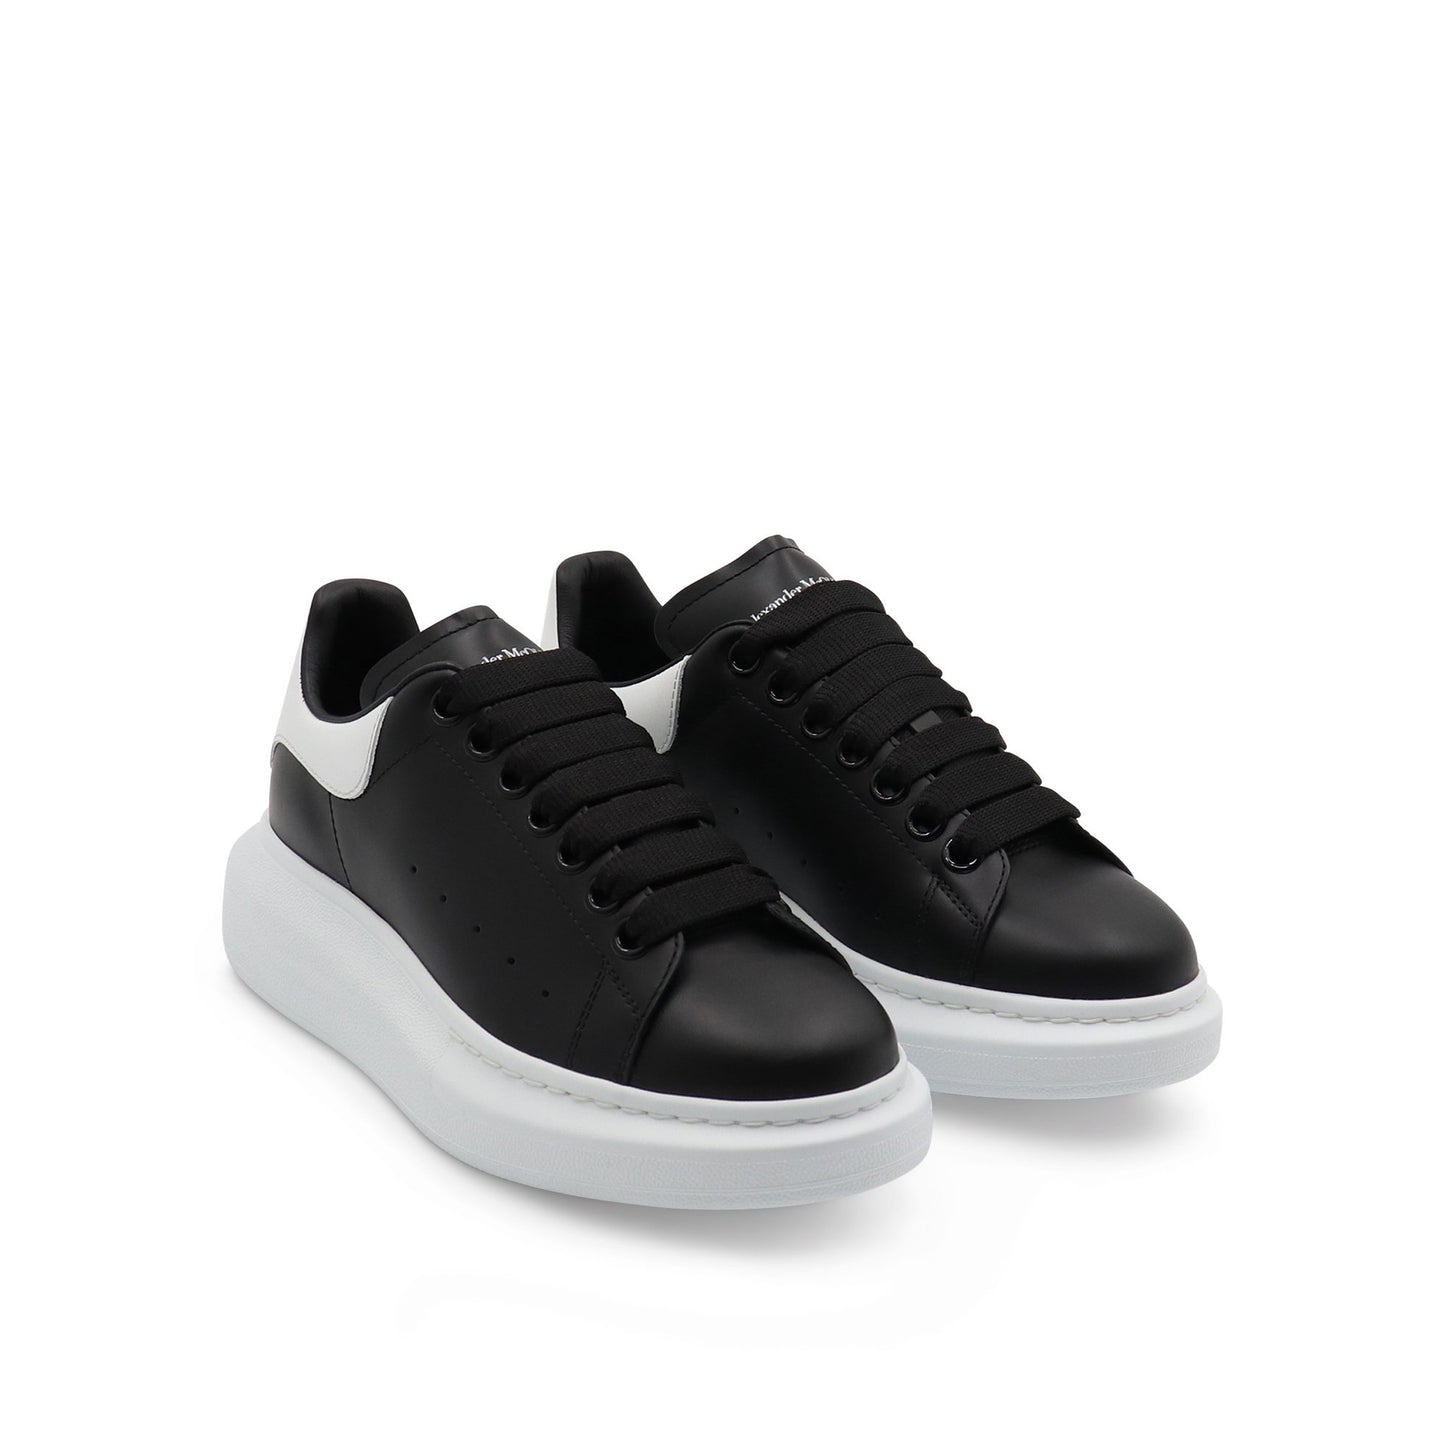 Larry Oversized Sneakers in Black/White